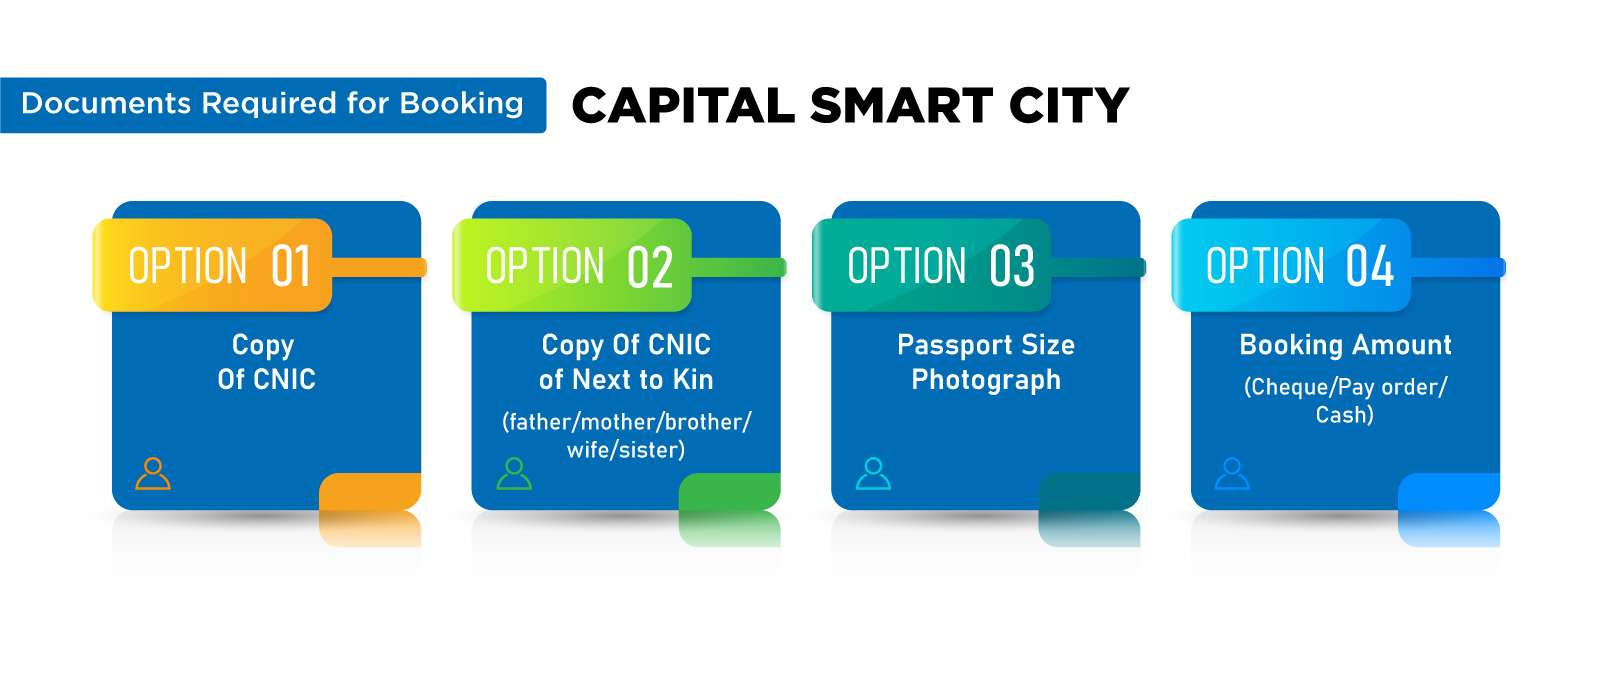 Capital Smart City Booking